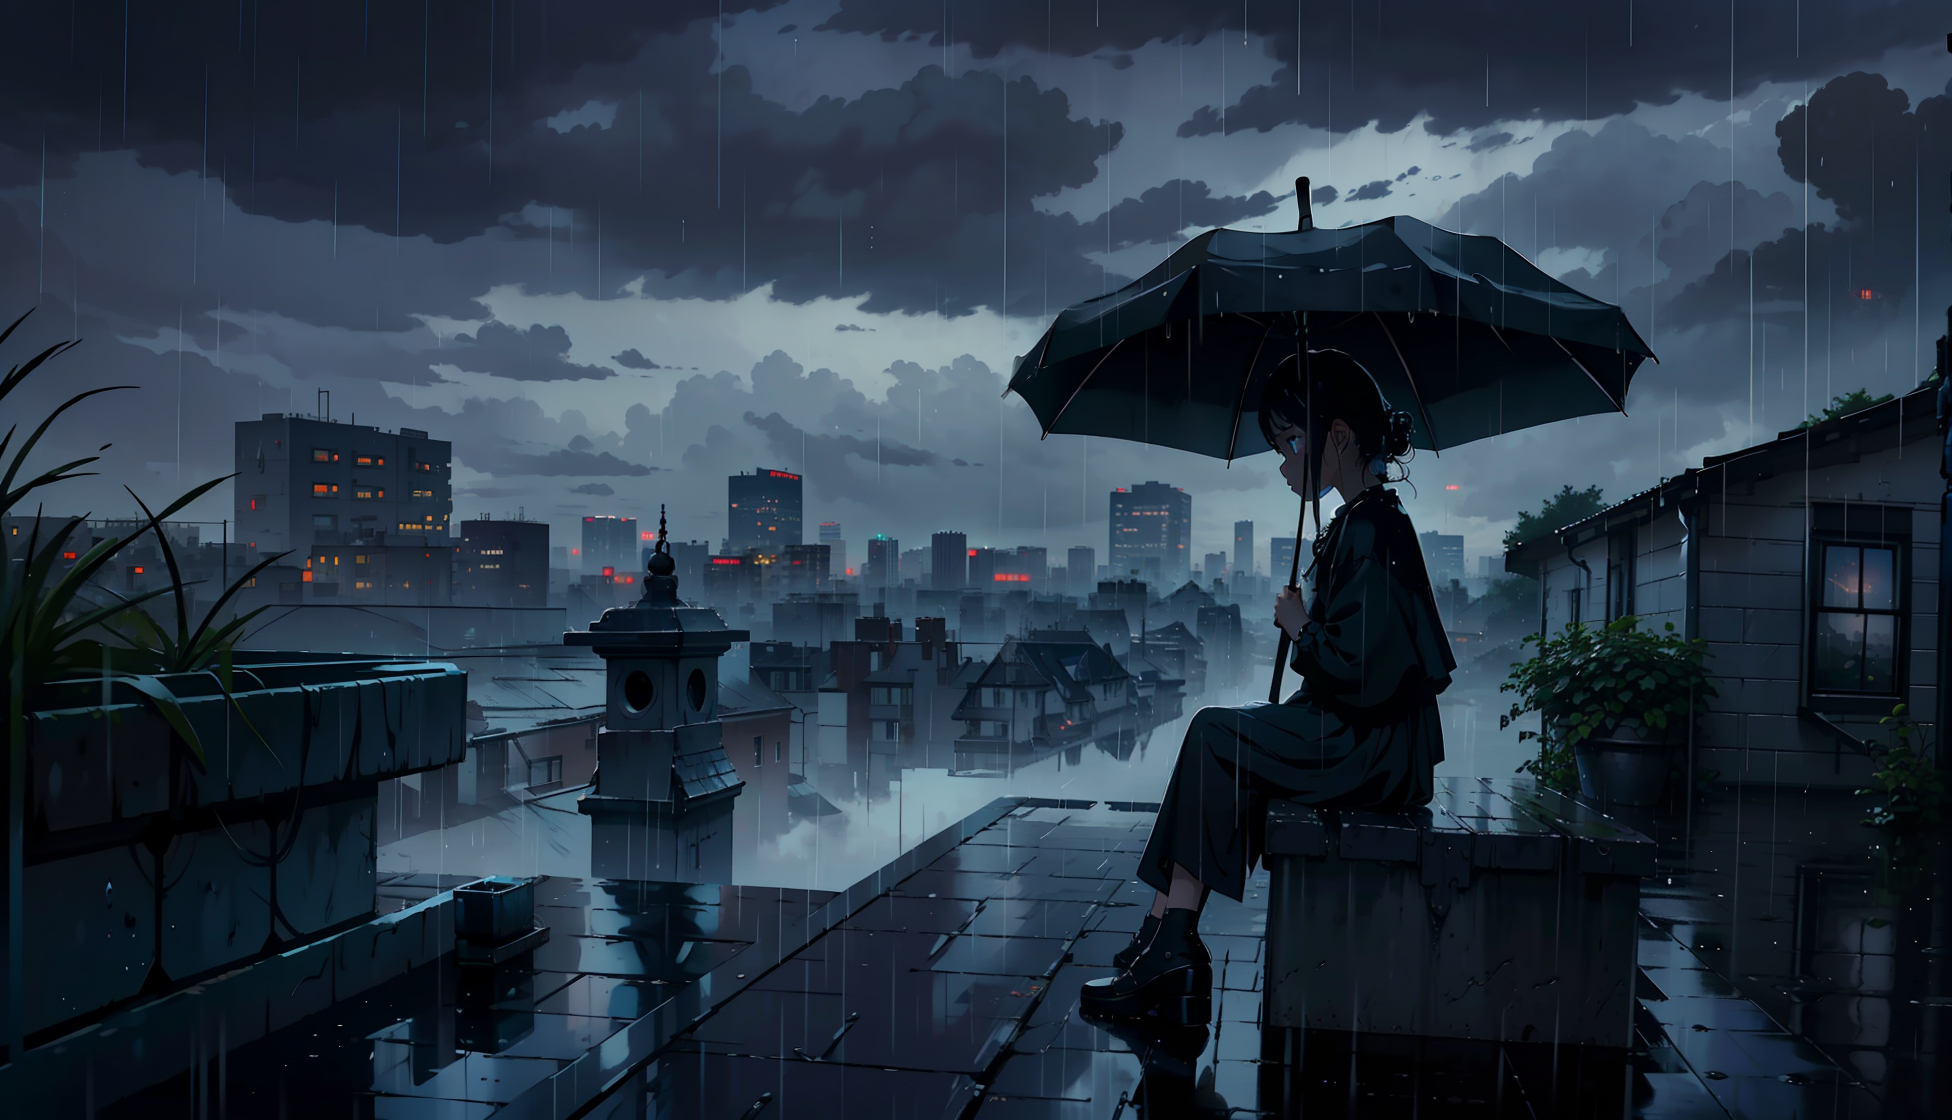 1500x998 / umbrella rain city schoolgirls alone waiting anime anime girls  wallpaper - Coolwallpapers.me!